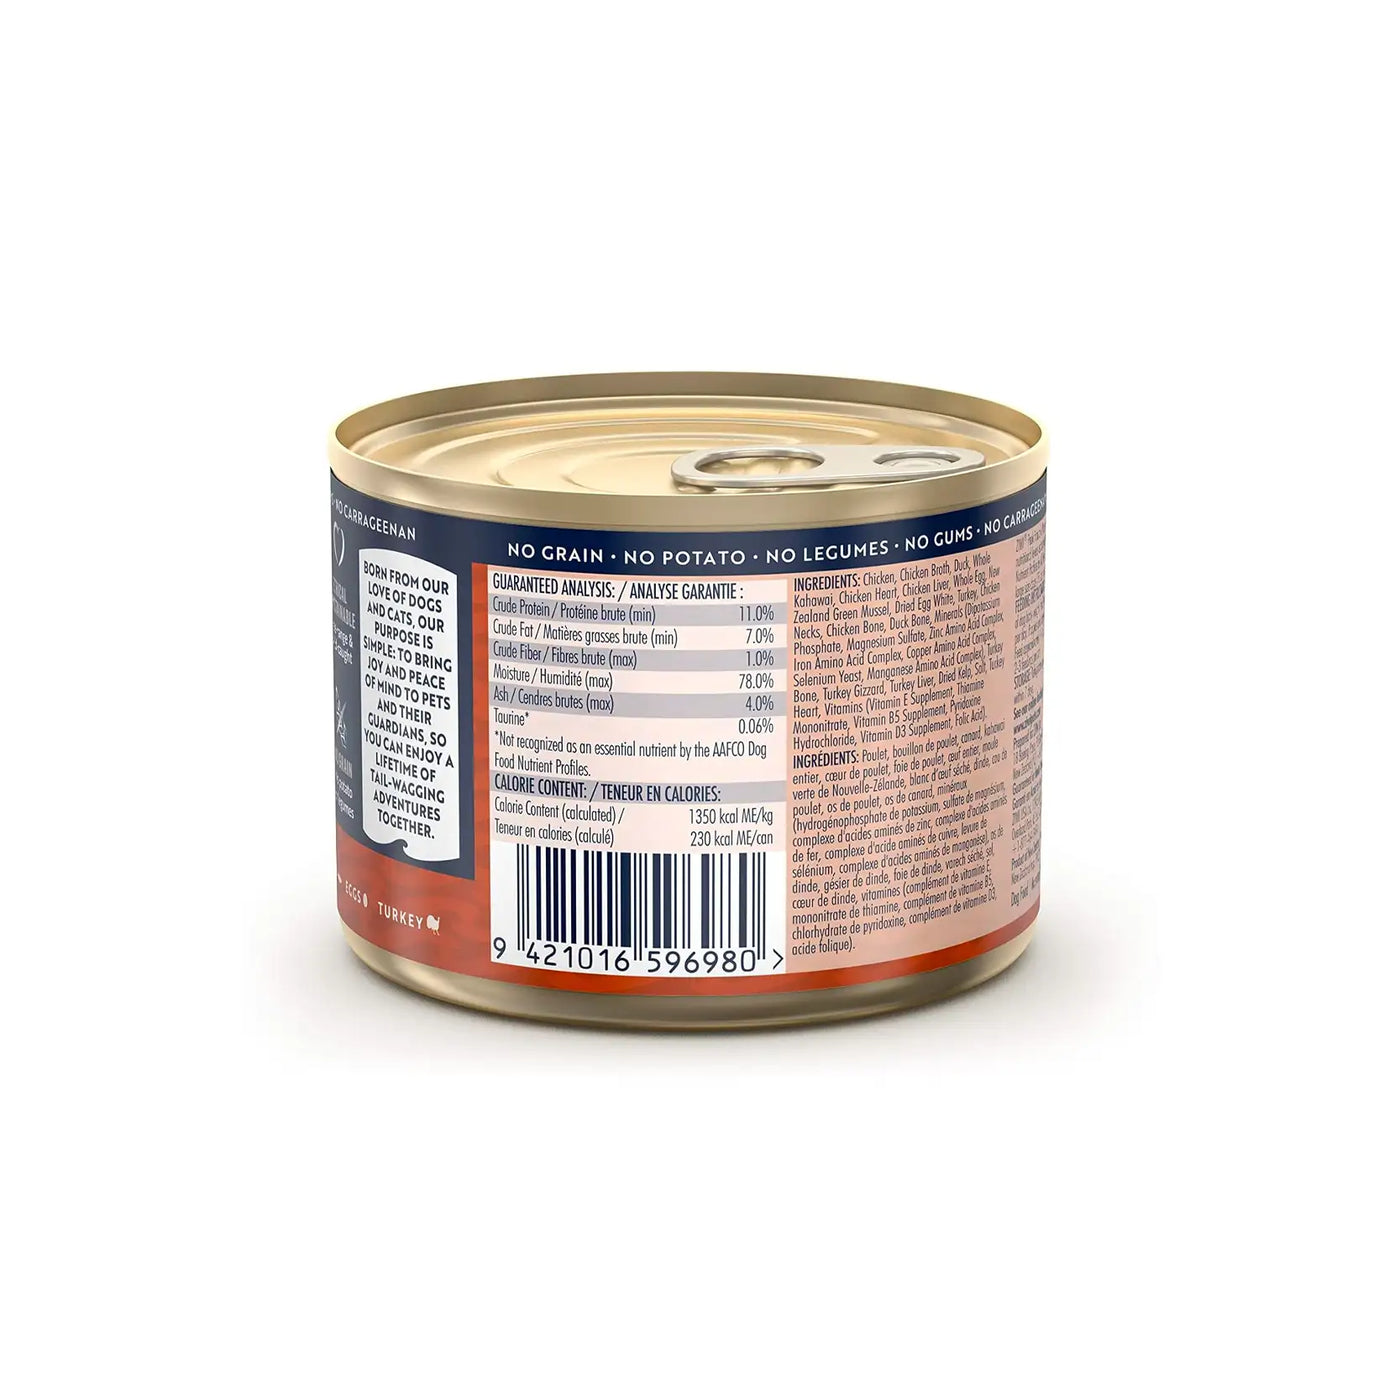 ZiwiPeak Moist Dog Food - Hauraki Plains Recipe 170g